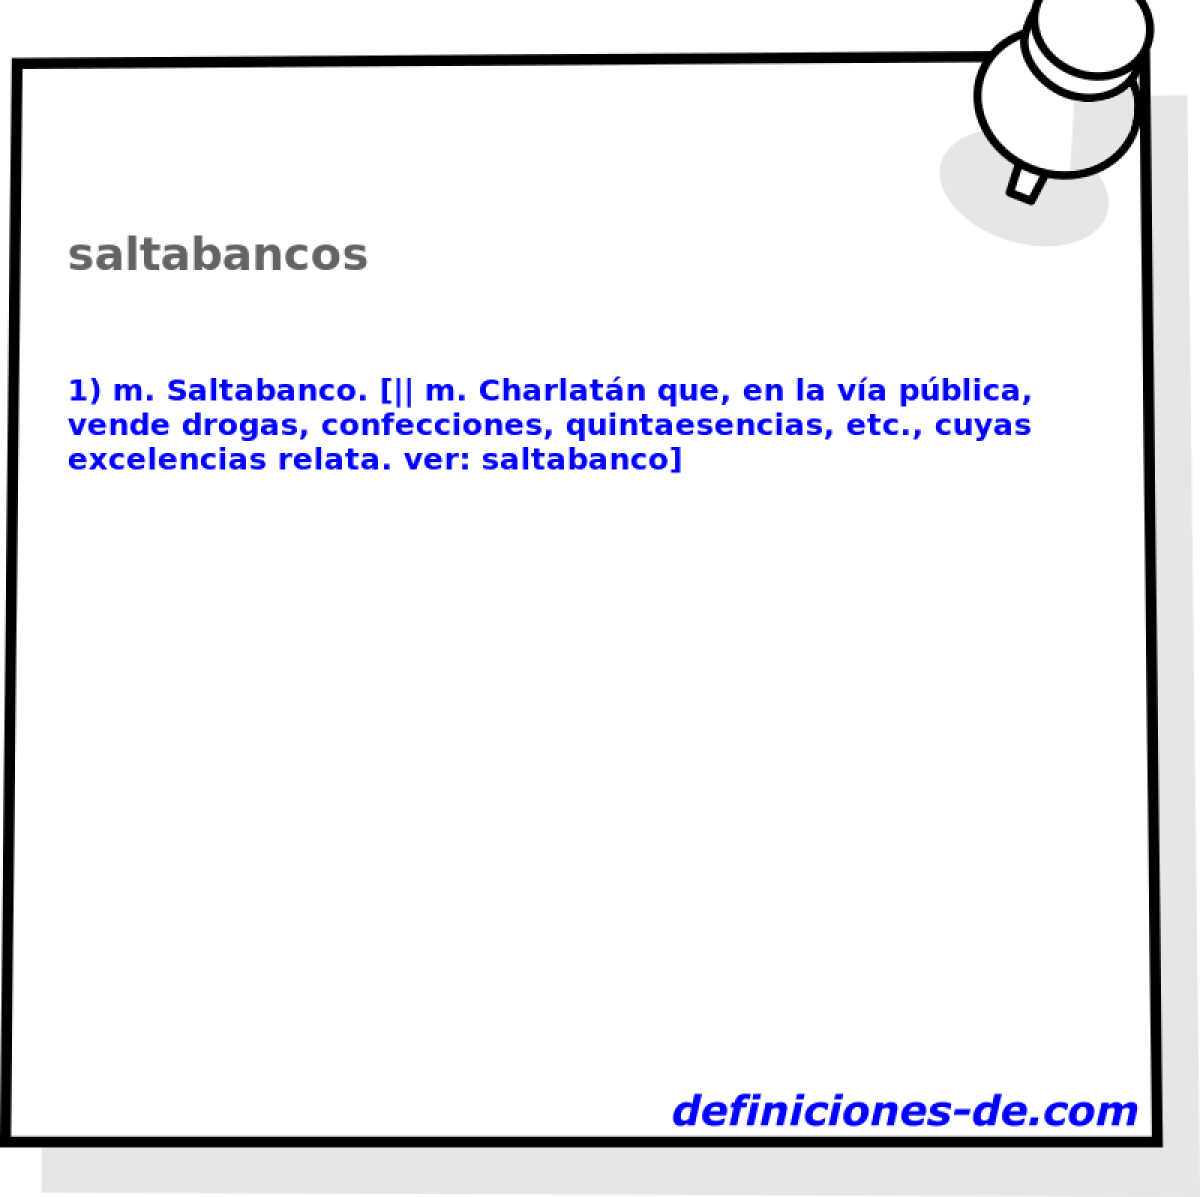 saltabancos 